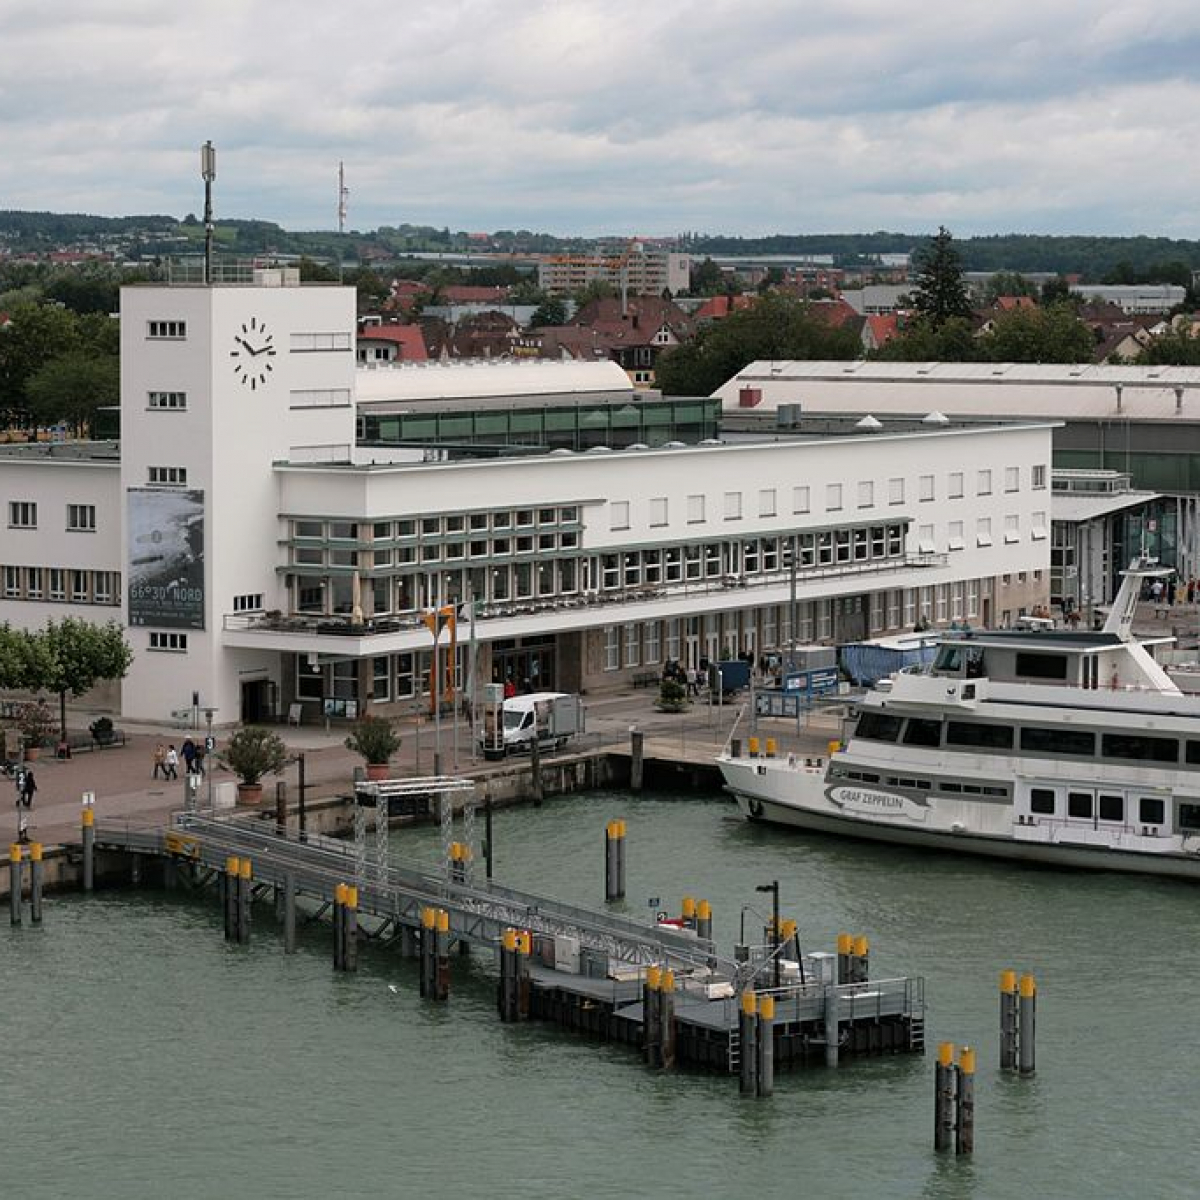 Yachtcharter Bodensee - Hausboot - Motoryacht - Motorboot